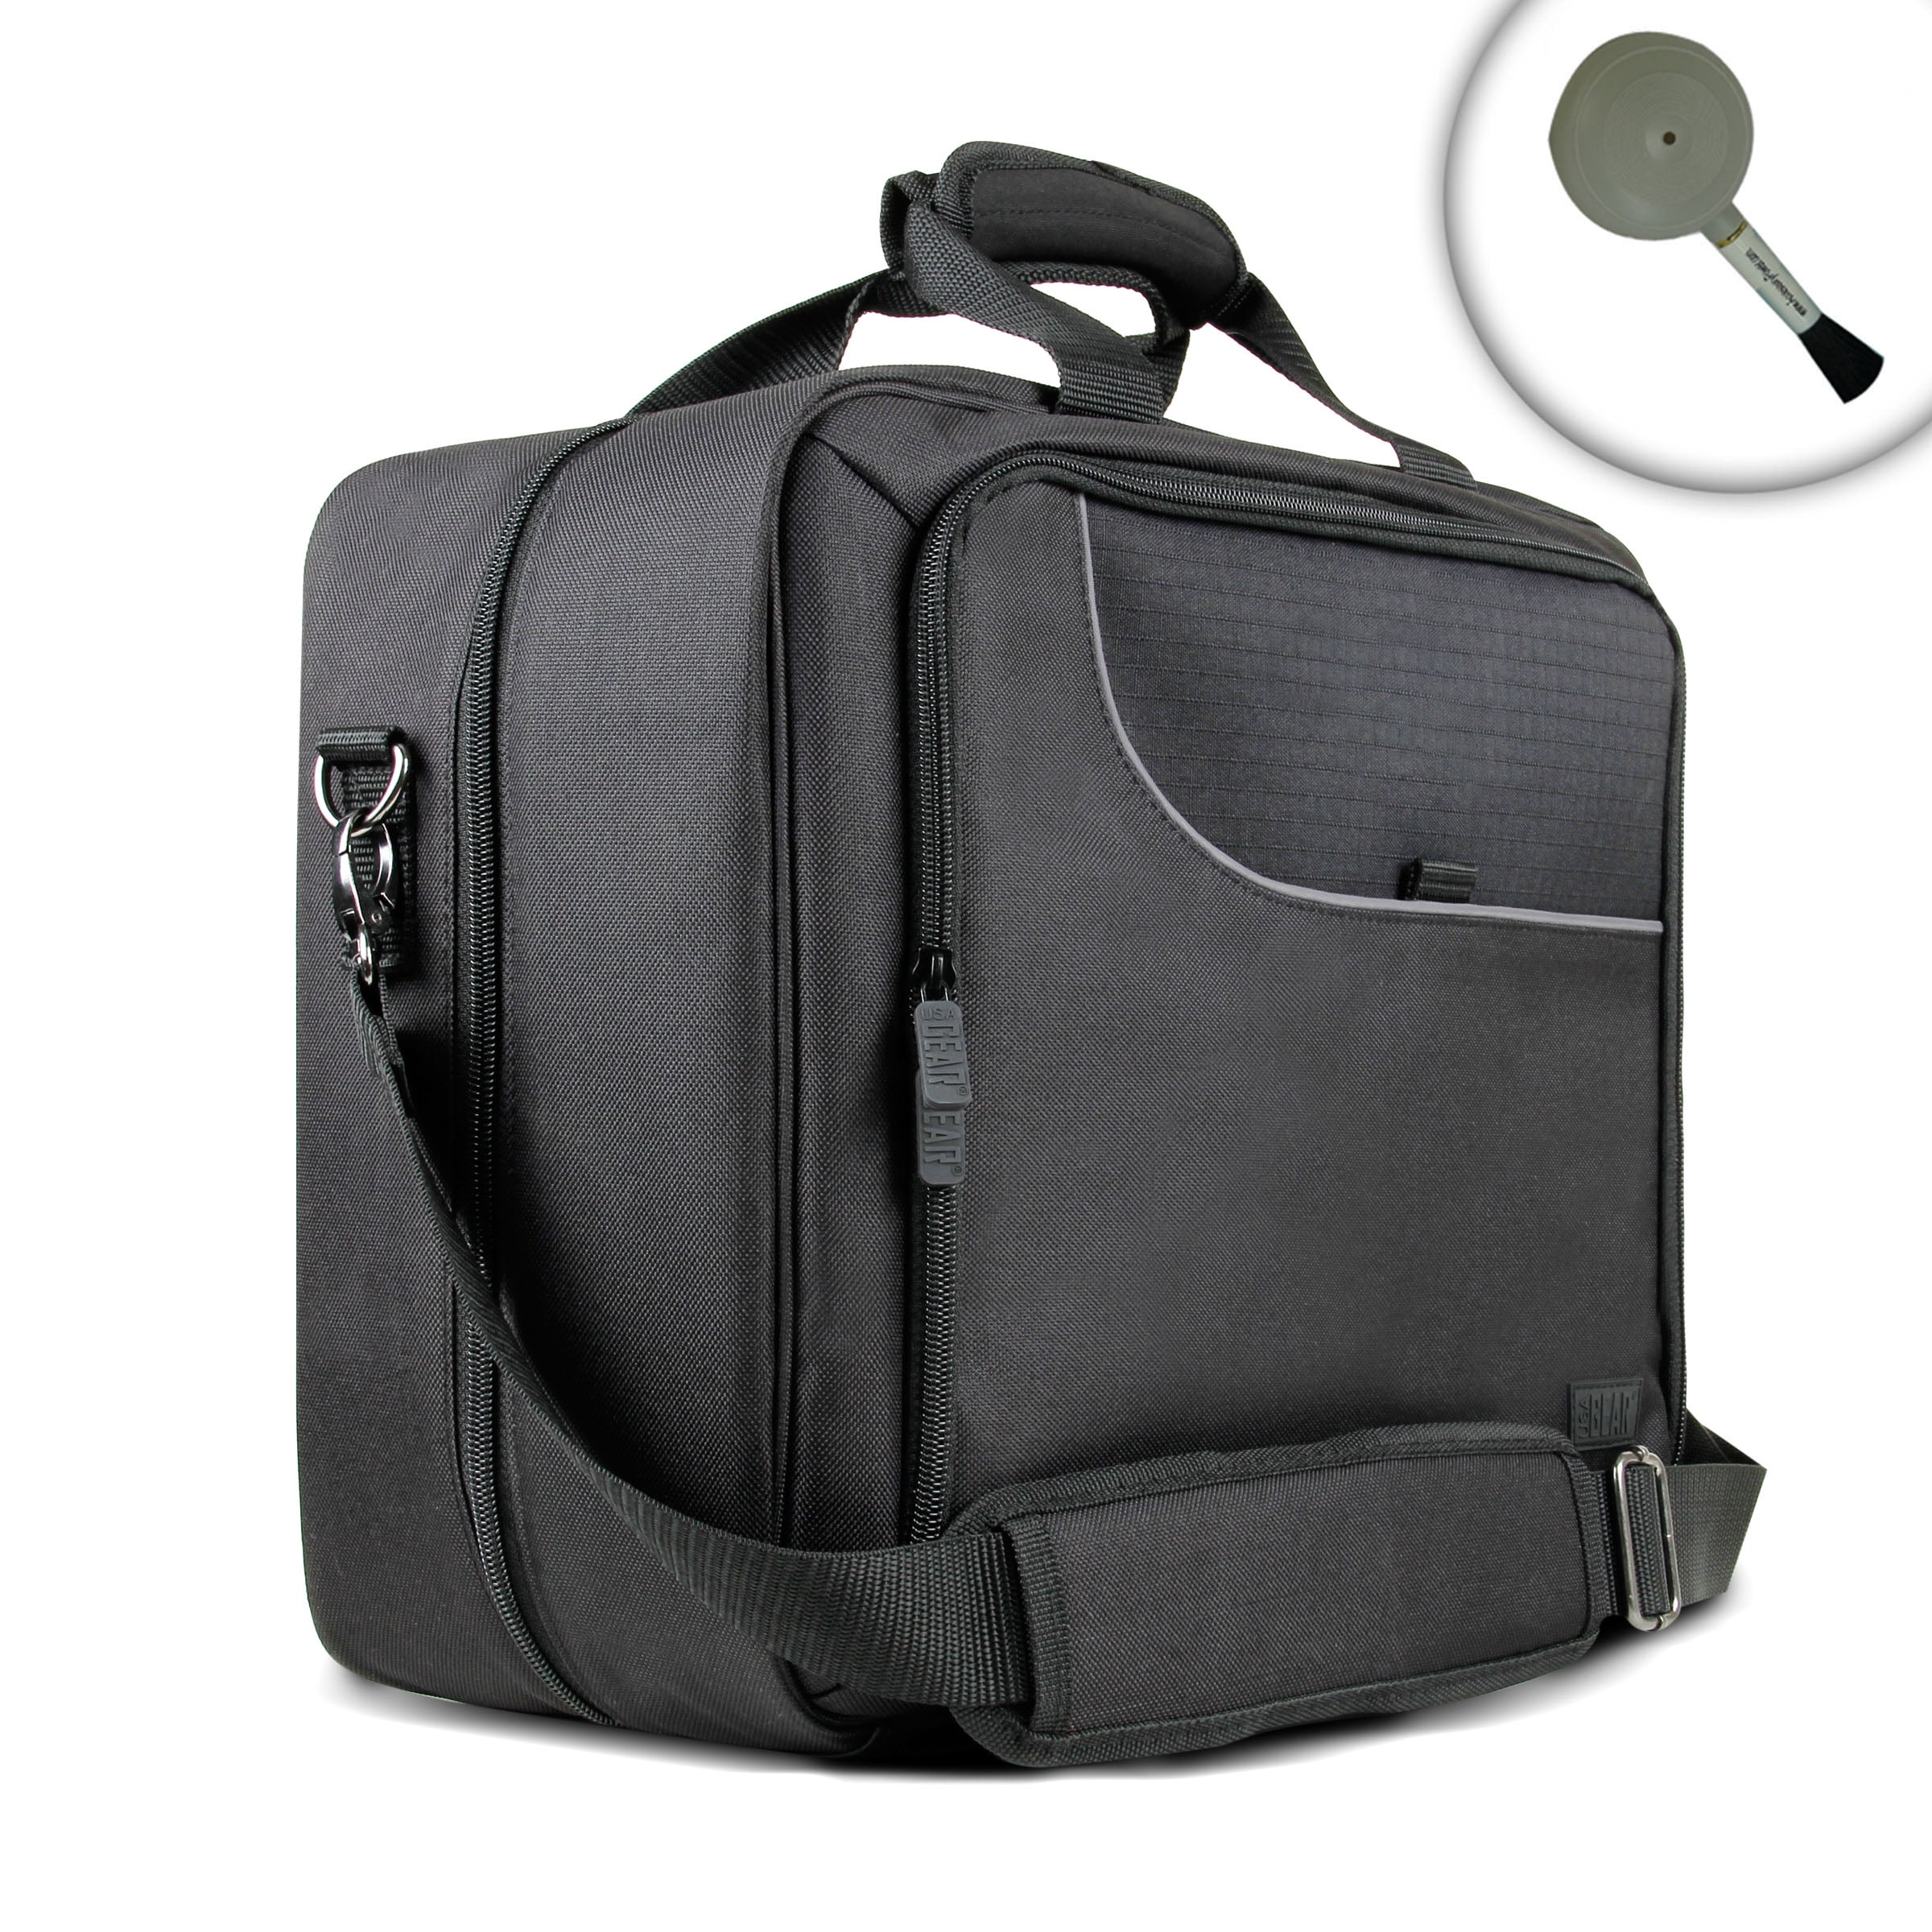 Portable Playstation 4 Travel Bag | Fits All PS4 and PS3 Models | eBay